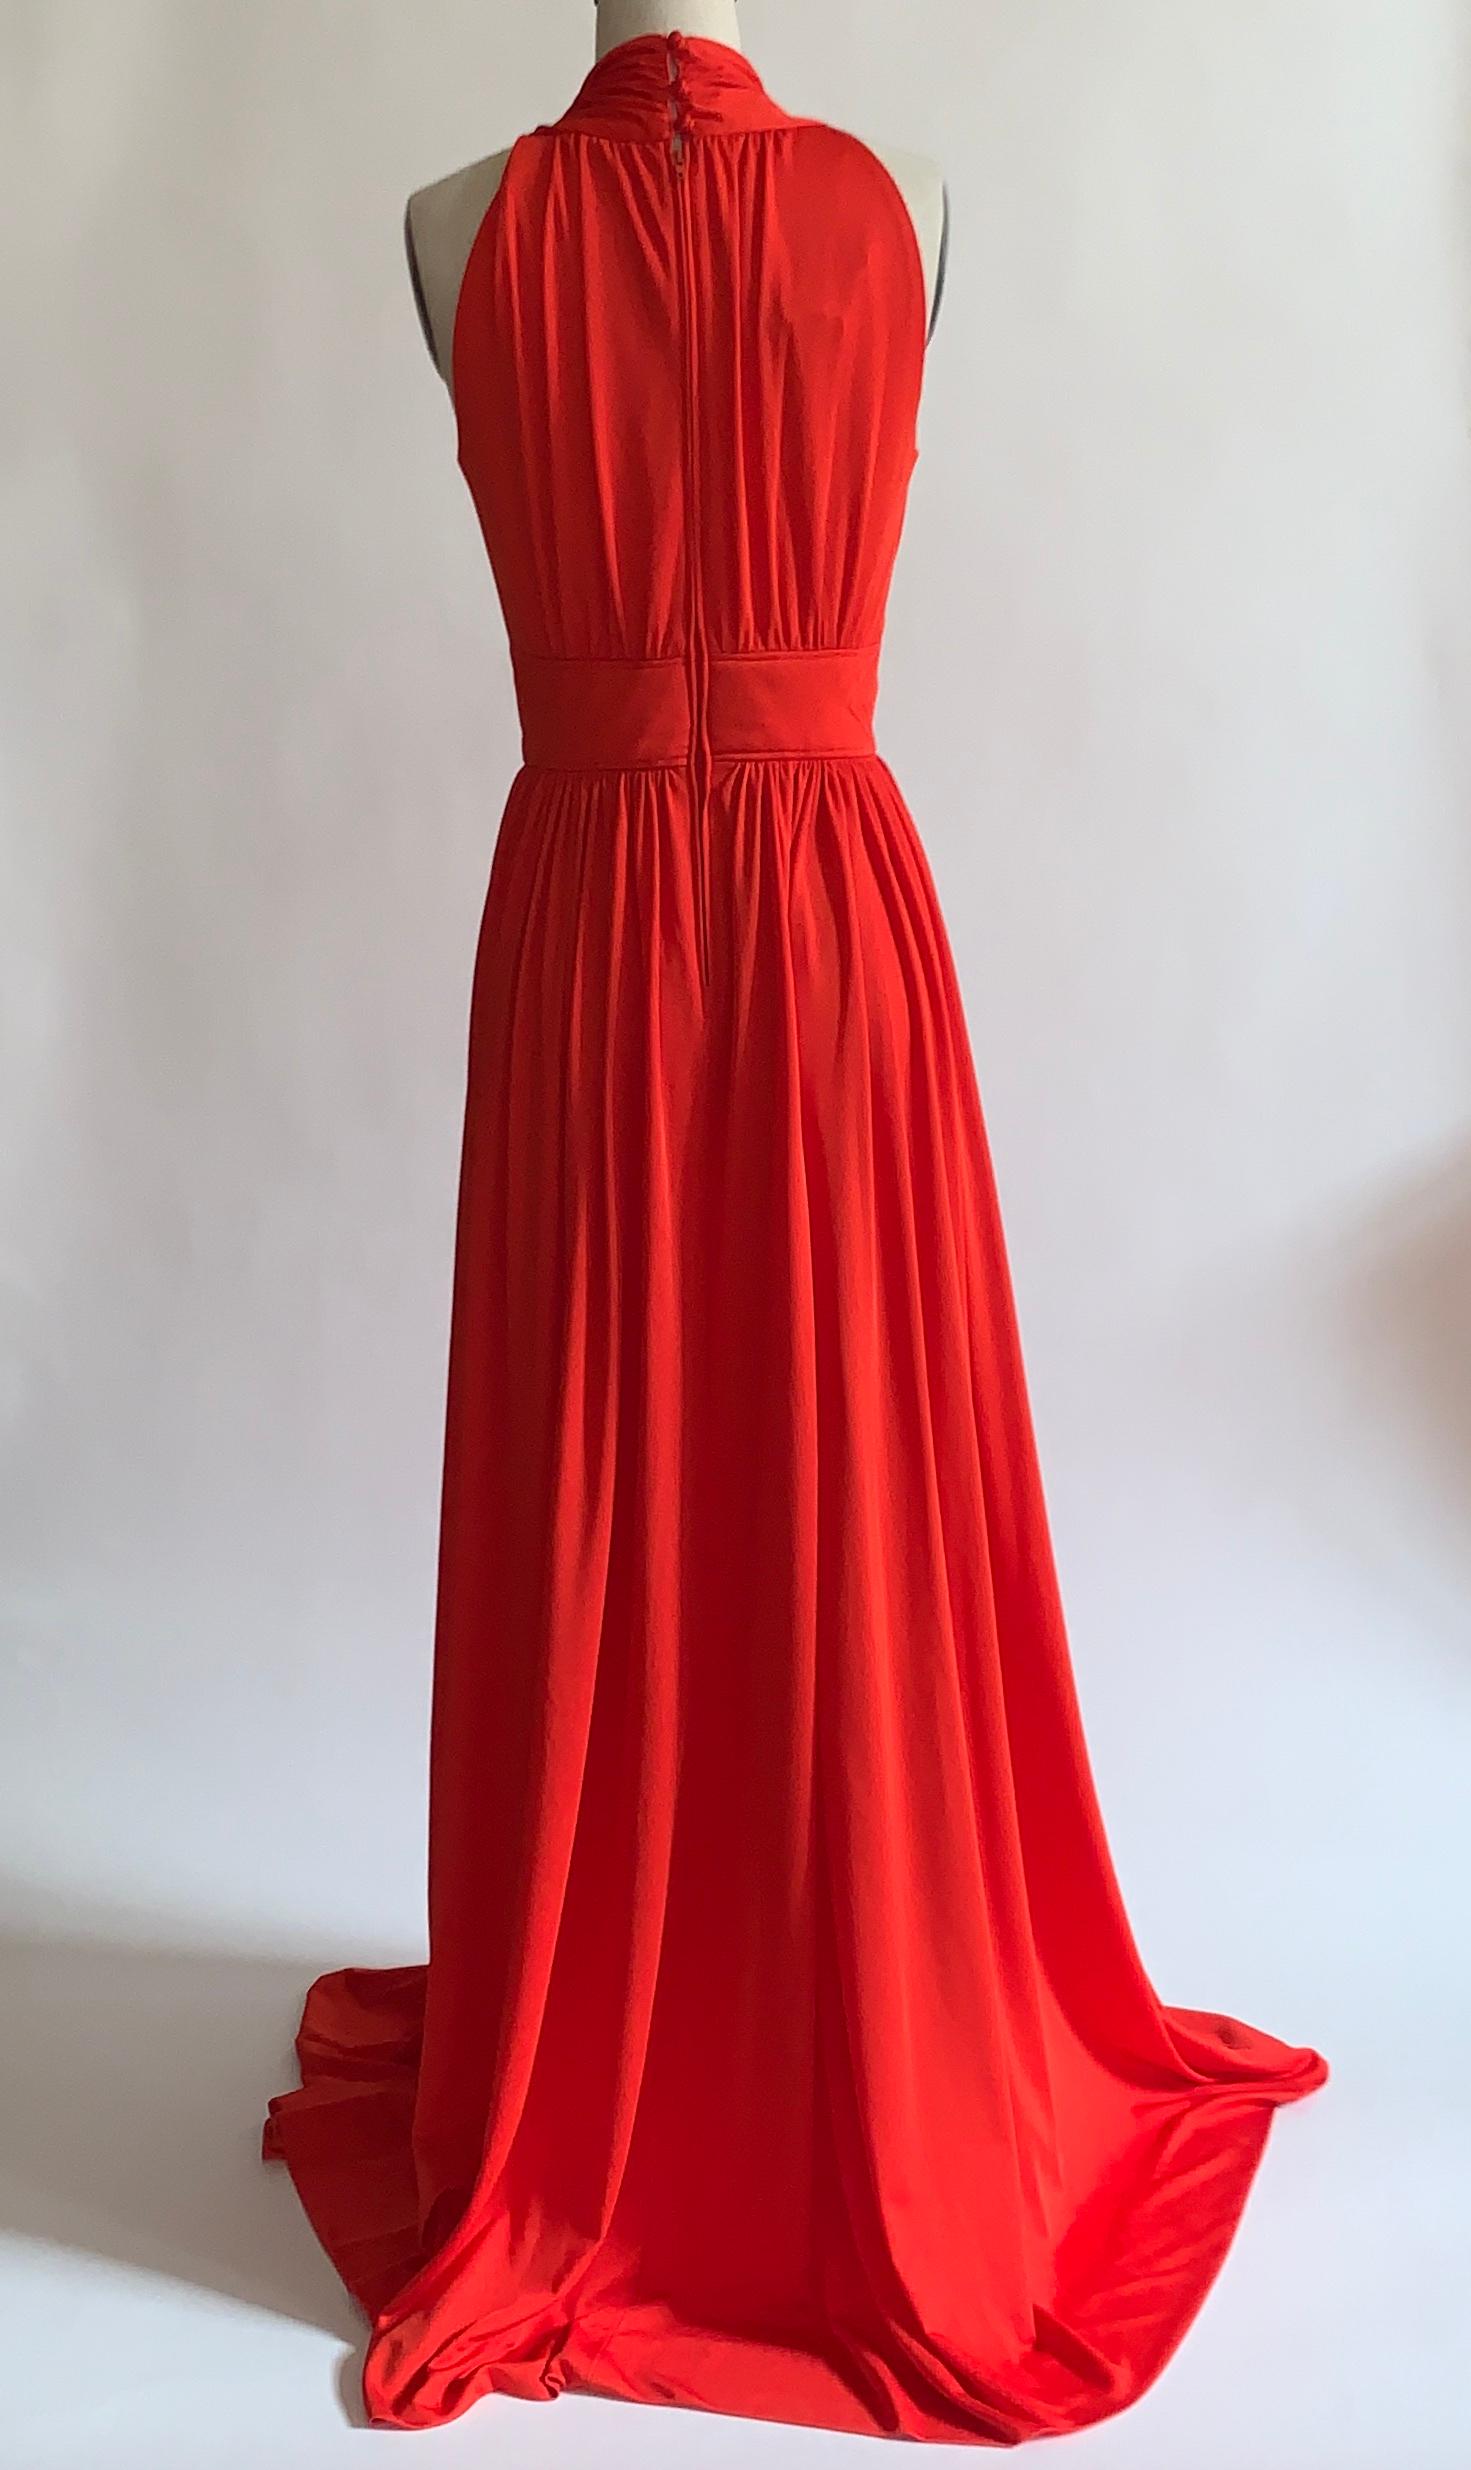 1970s red dress